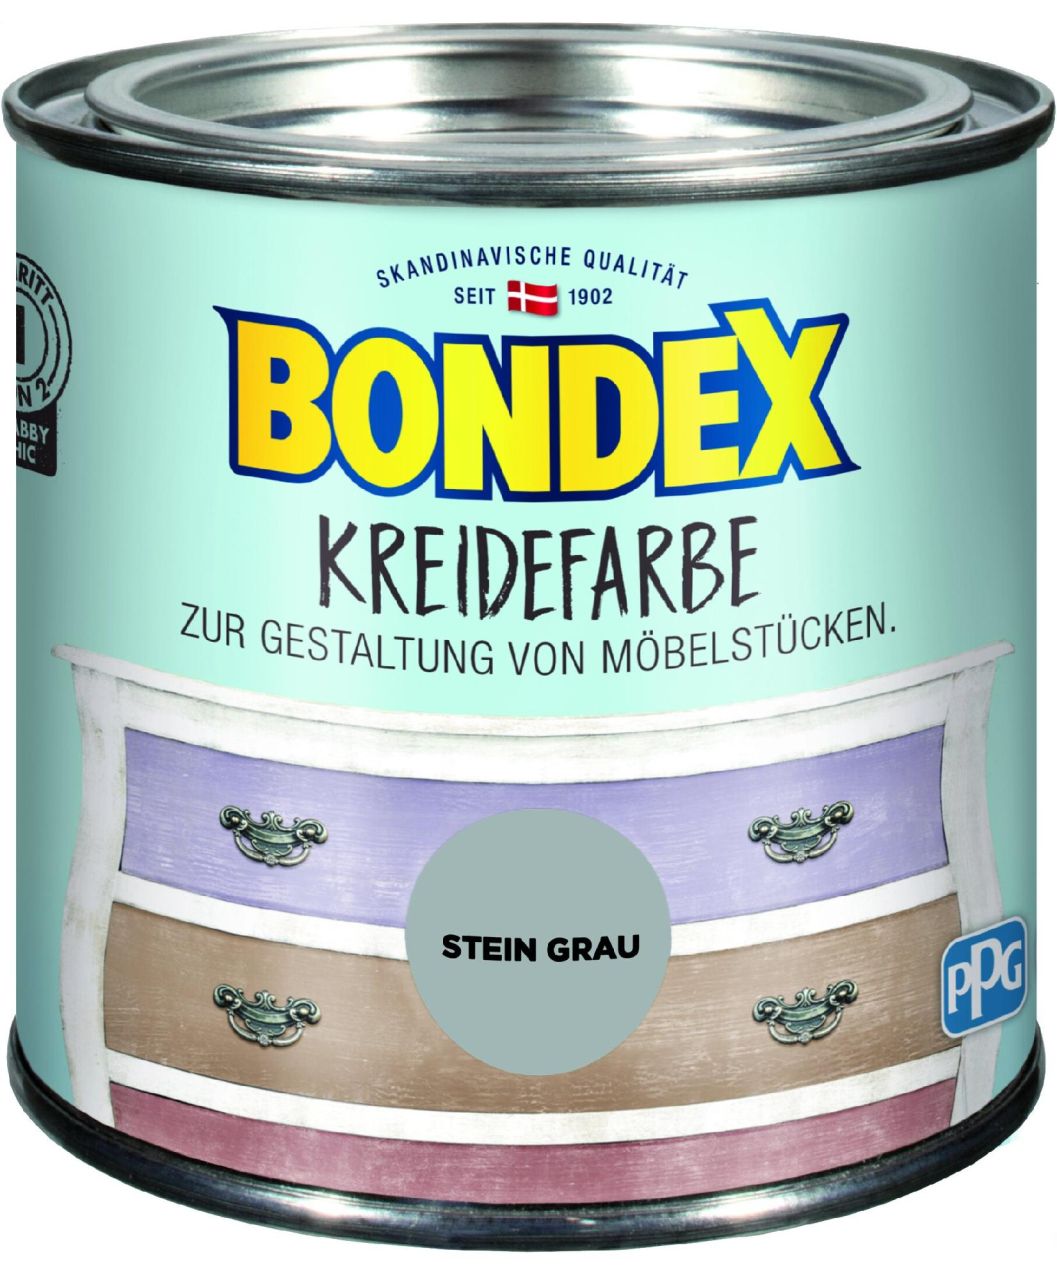 Bondex Kreidefarbe 500 ml stein grau von Bondex